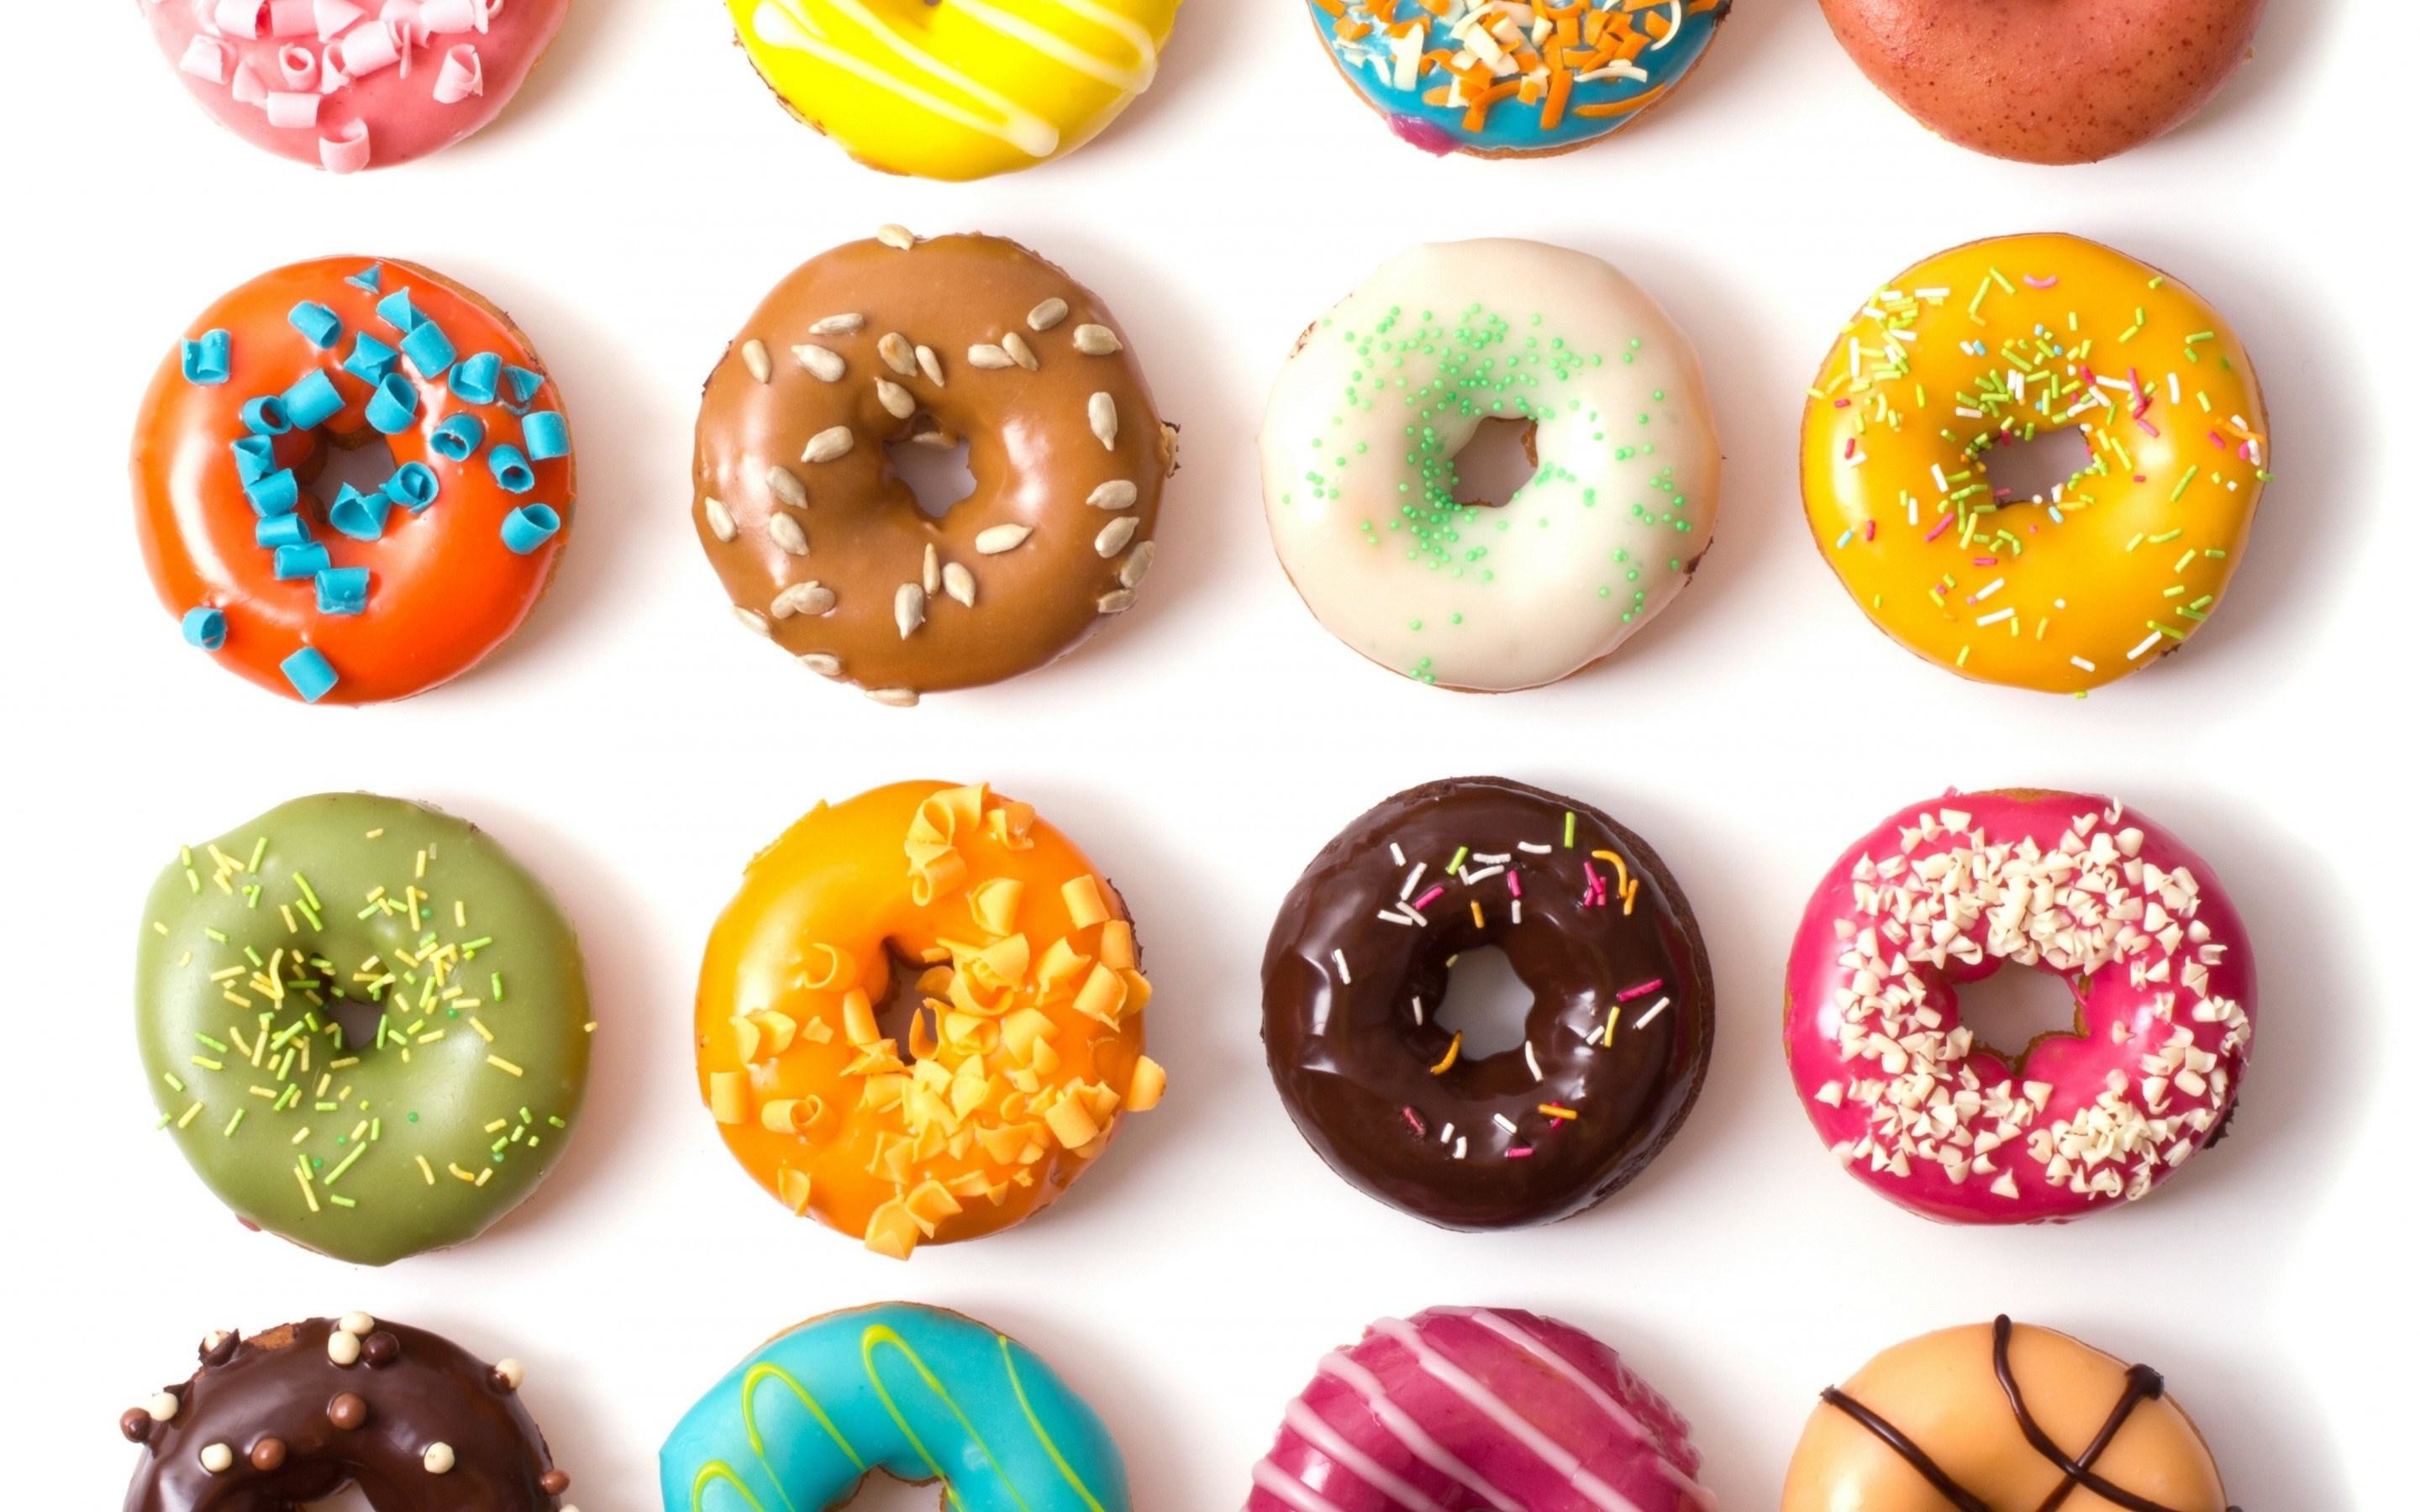 dunkin donuts wallpaper,krapfen,essen,junk food,ciambella,lebensmittelfarbe